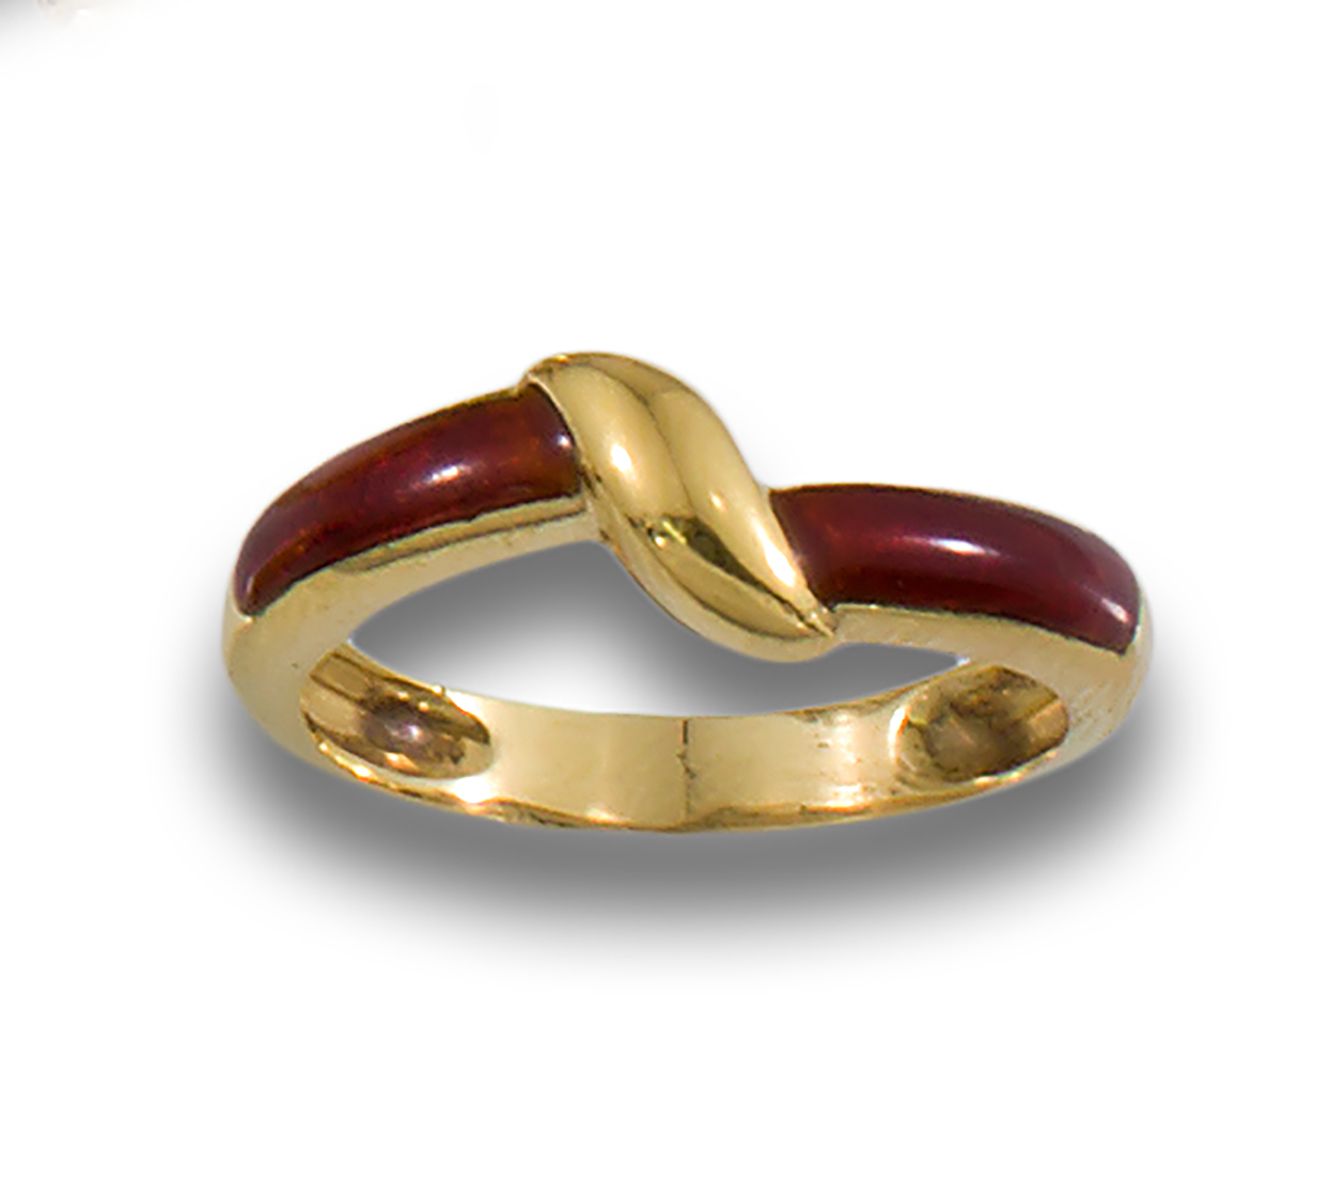 GOLD RING WITH BURGUNDY ENAMEL ARMS 18K黄金戒指，手臂上有精美的酒红色烧制珐琅 .